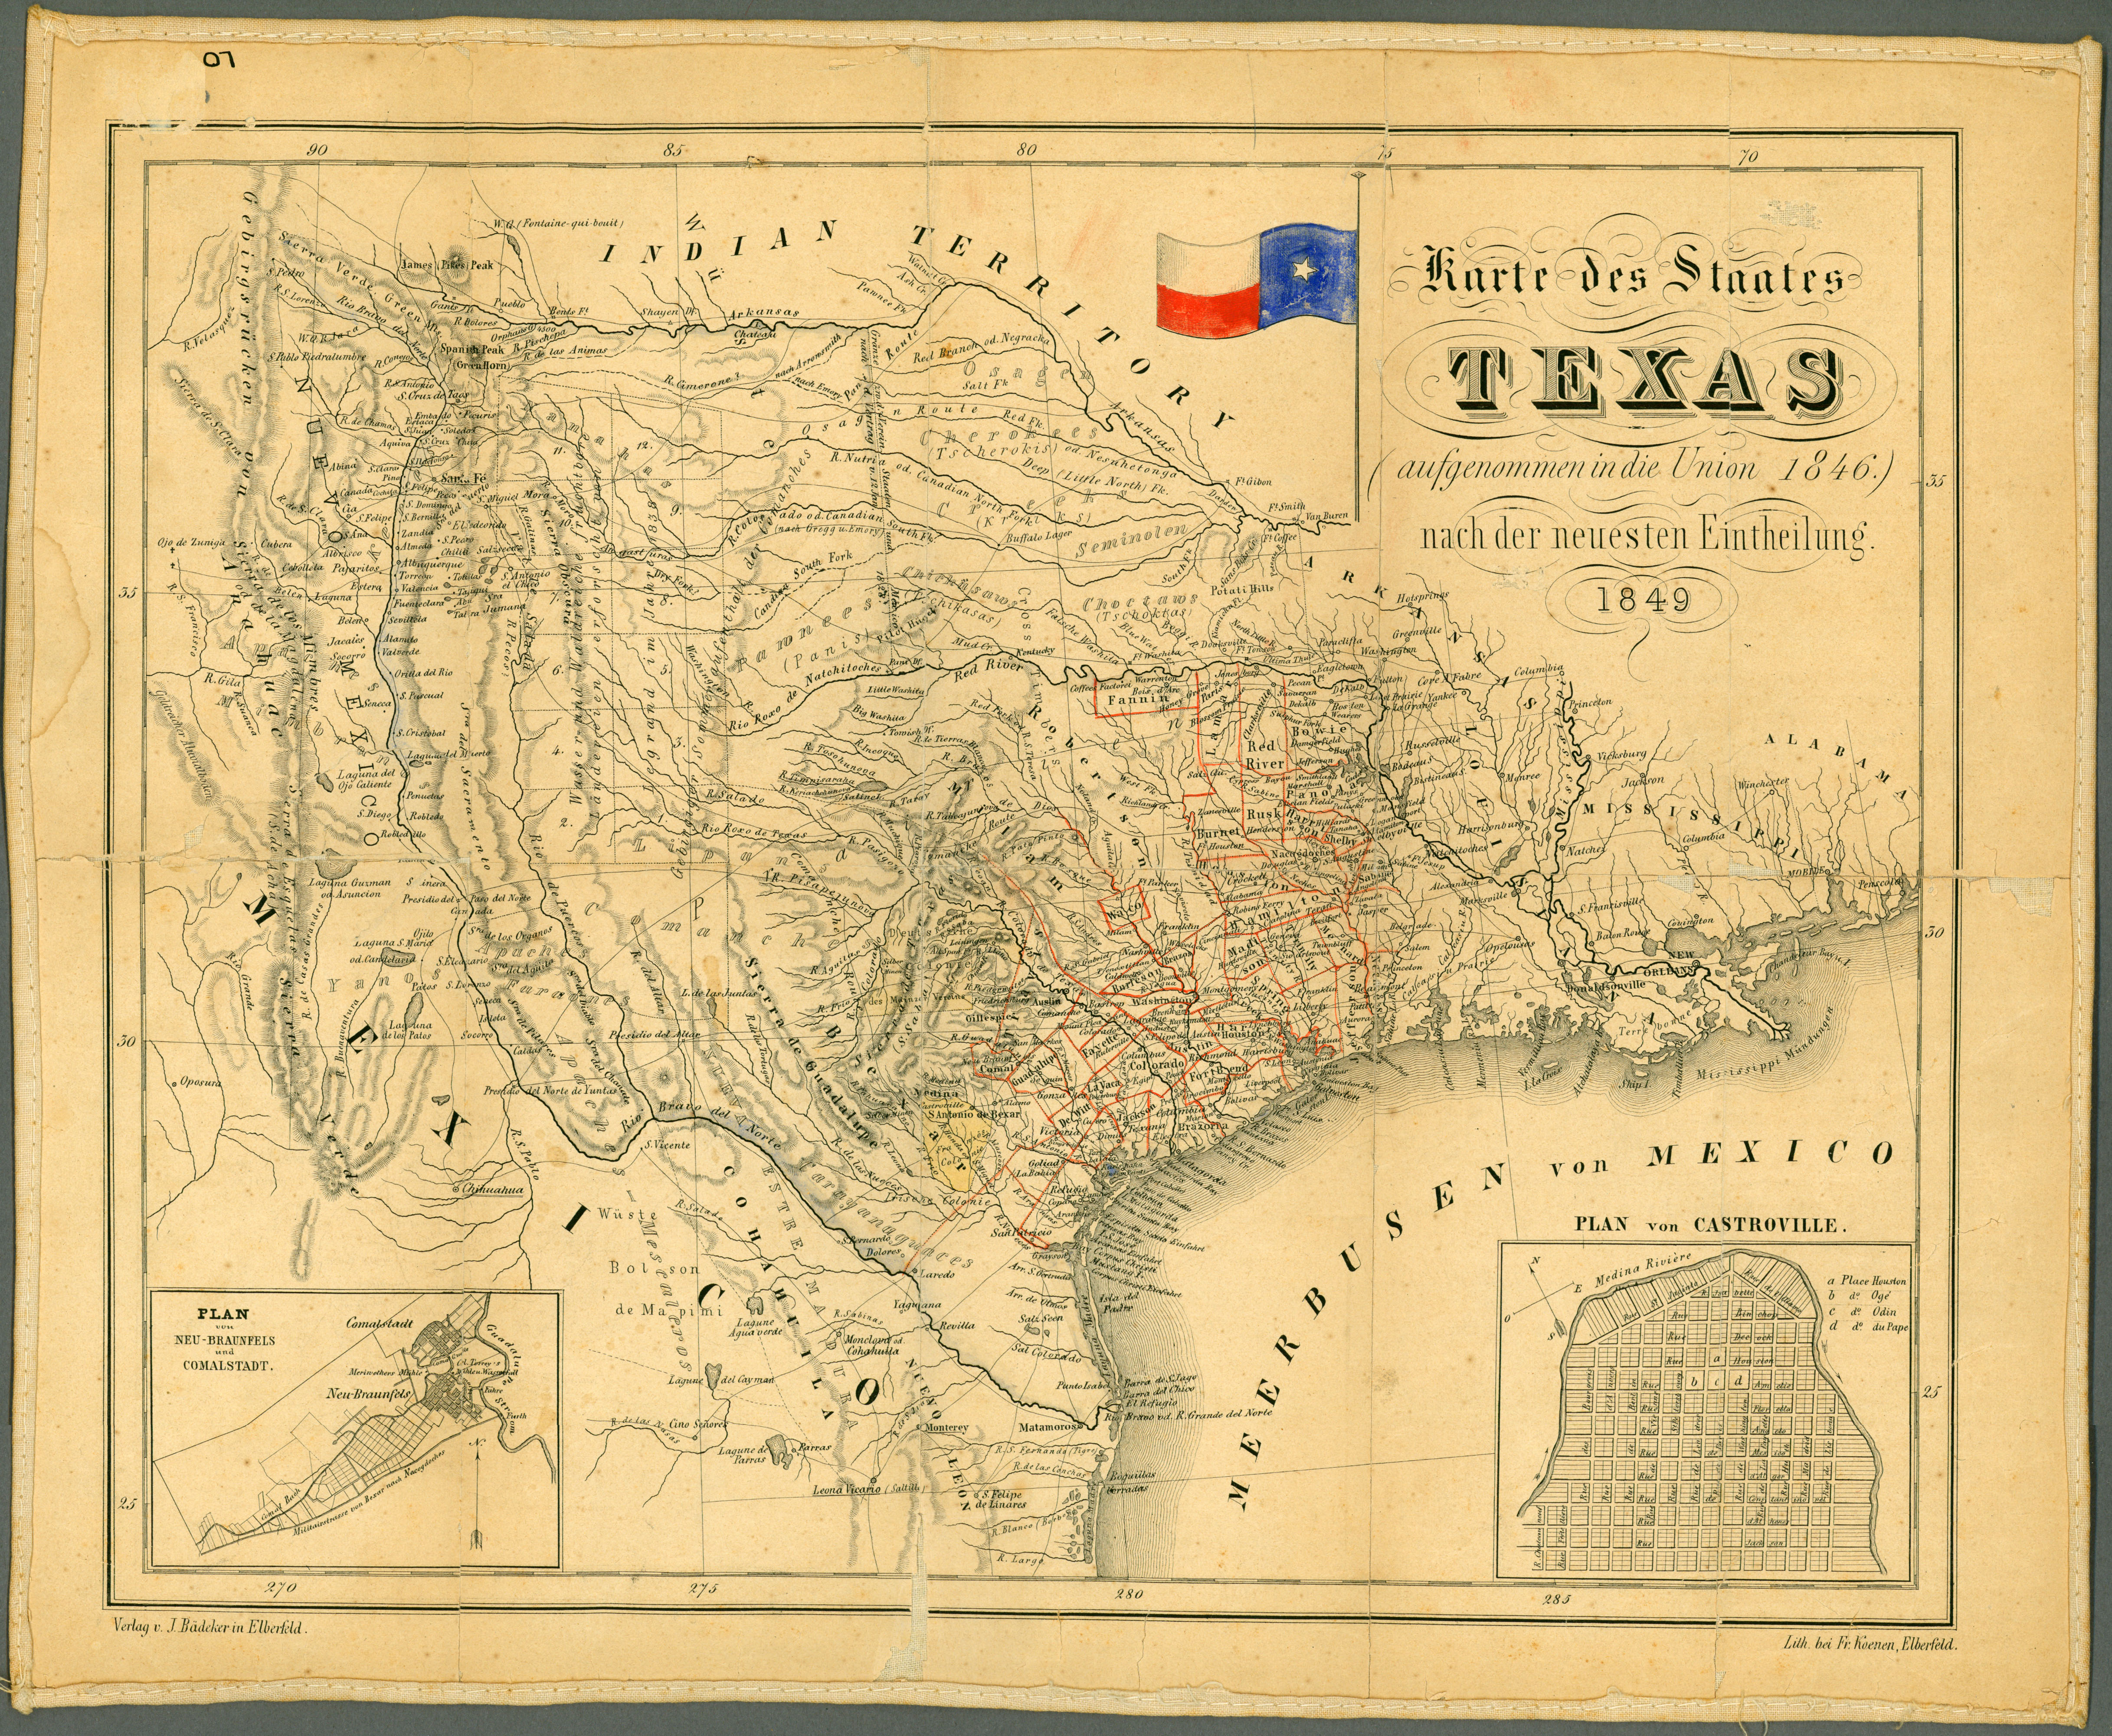 Texas Historical Maps - Perry-Castañeda Map Collection - Ut Library - Texas Historical Maps